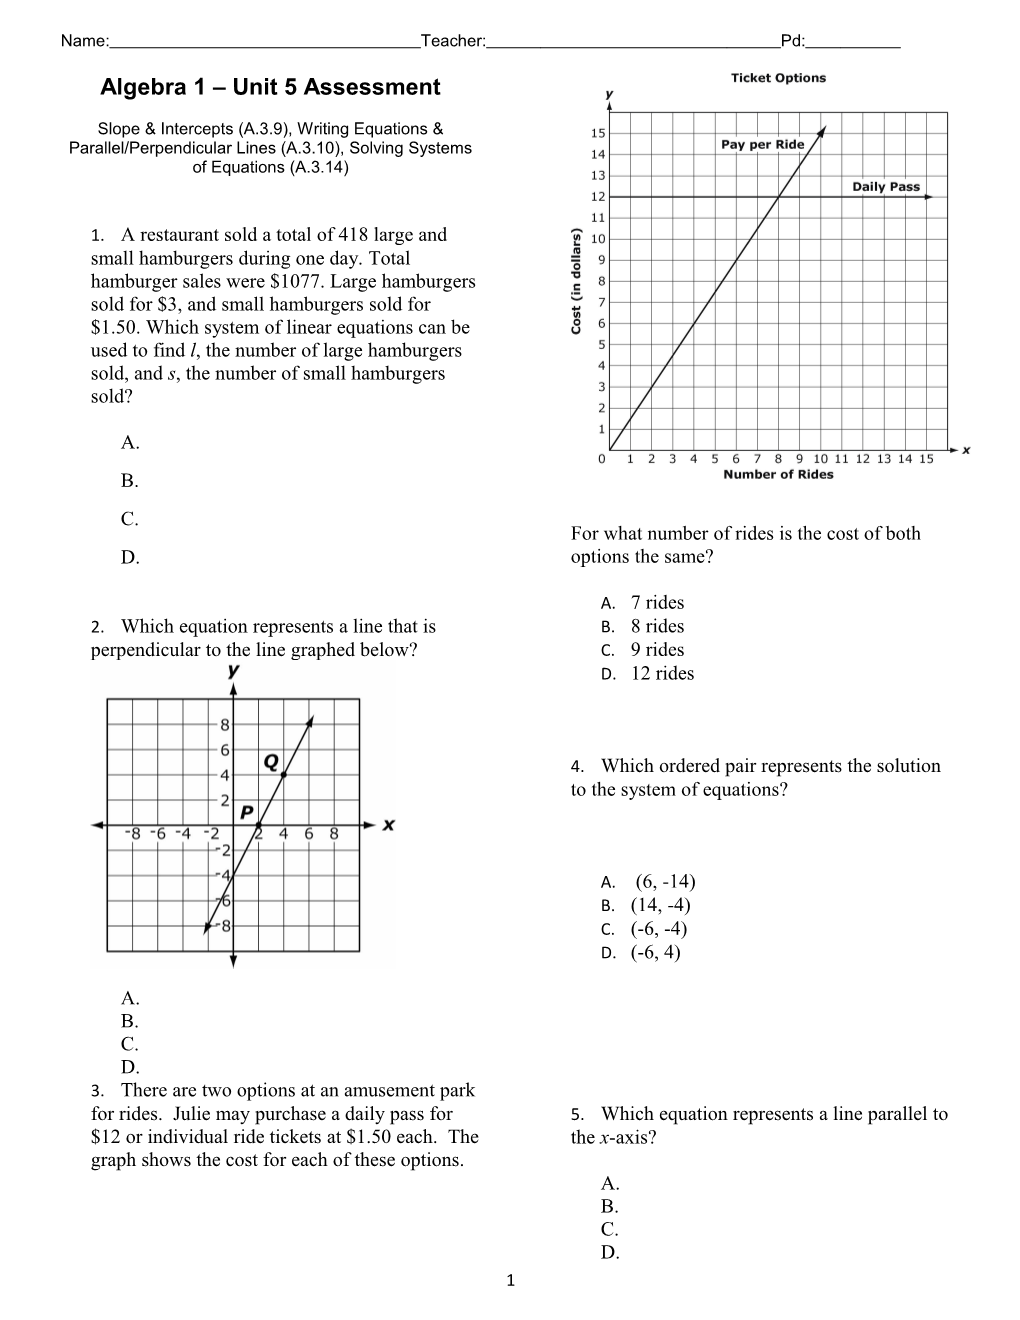 Algebra 1 Unit 5 Assessment